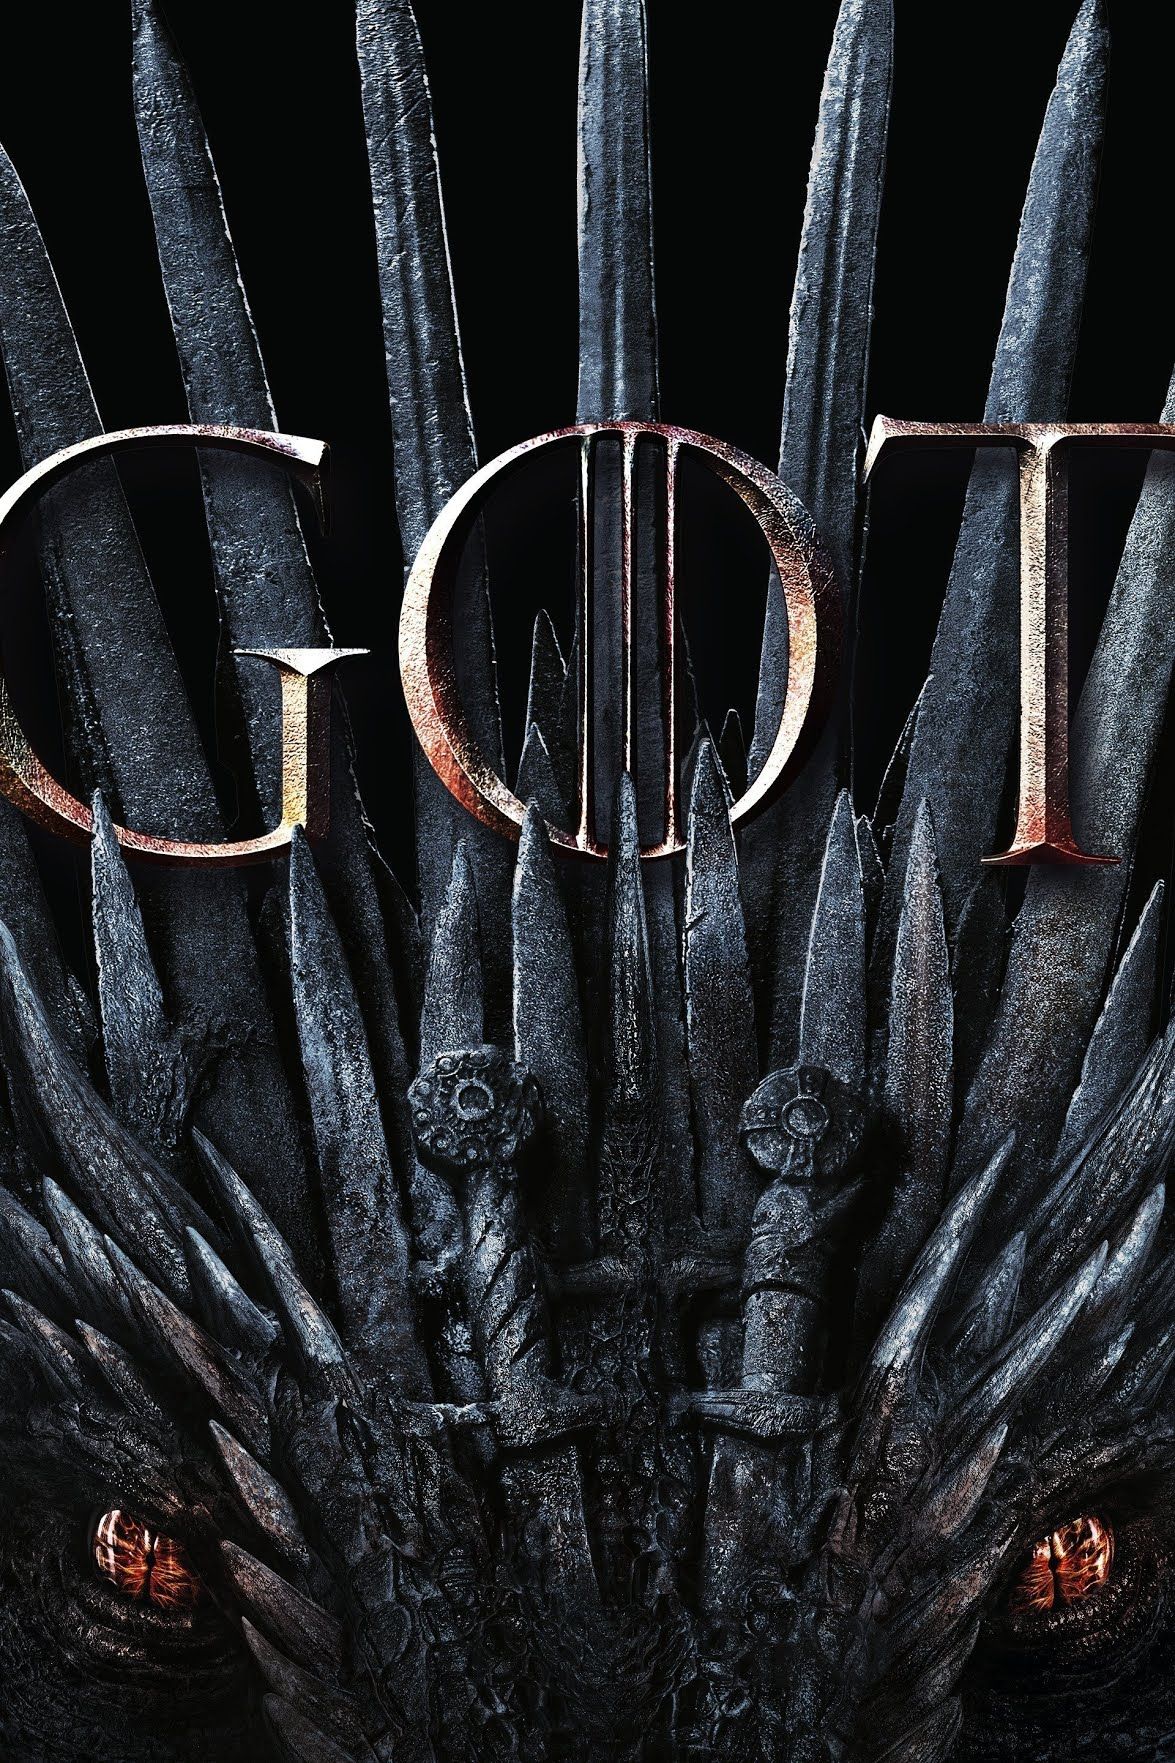 Game of Thrones (Season 6) Hindi Dubbed HBO Series HDRip 720p 480p